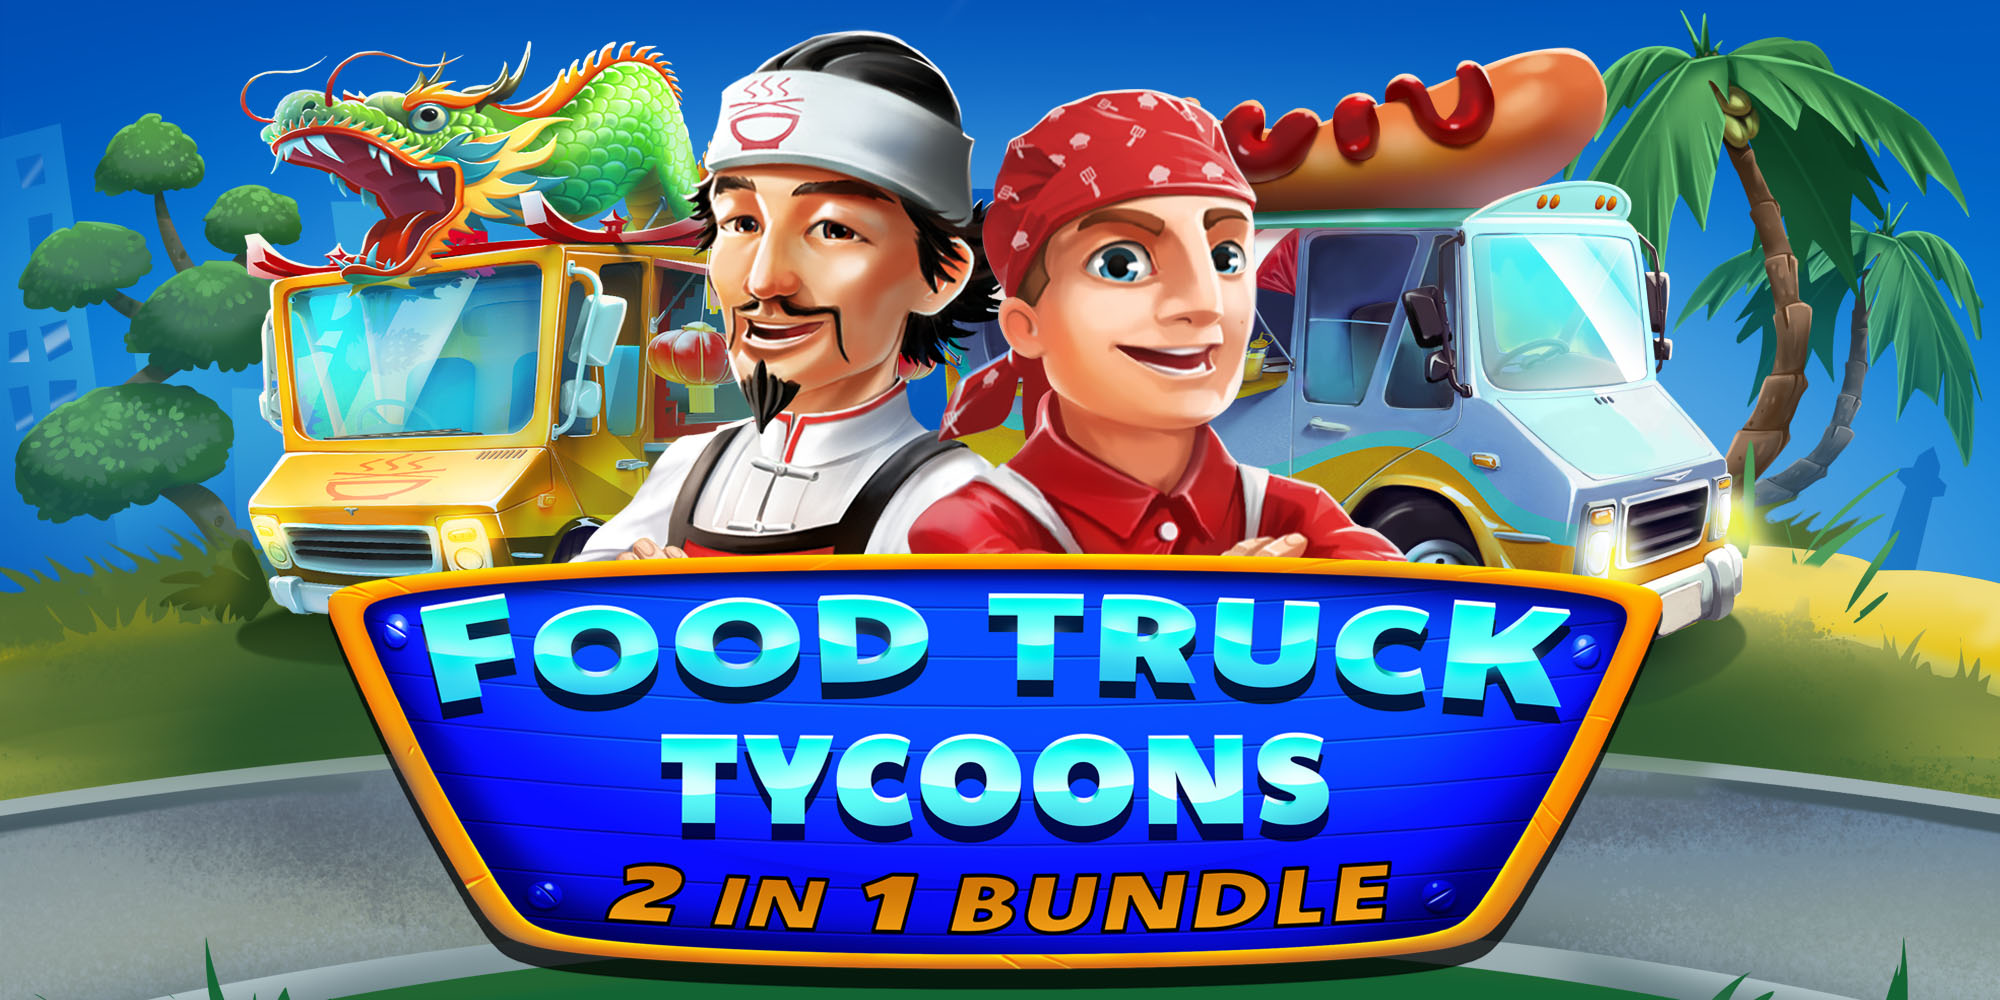 Food Truck Tycoons - 2 in 1 Bundle | Nintendo Switch download software |  Games | Nintendo